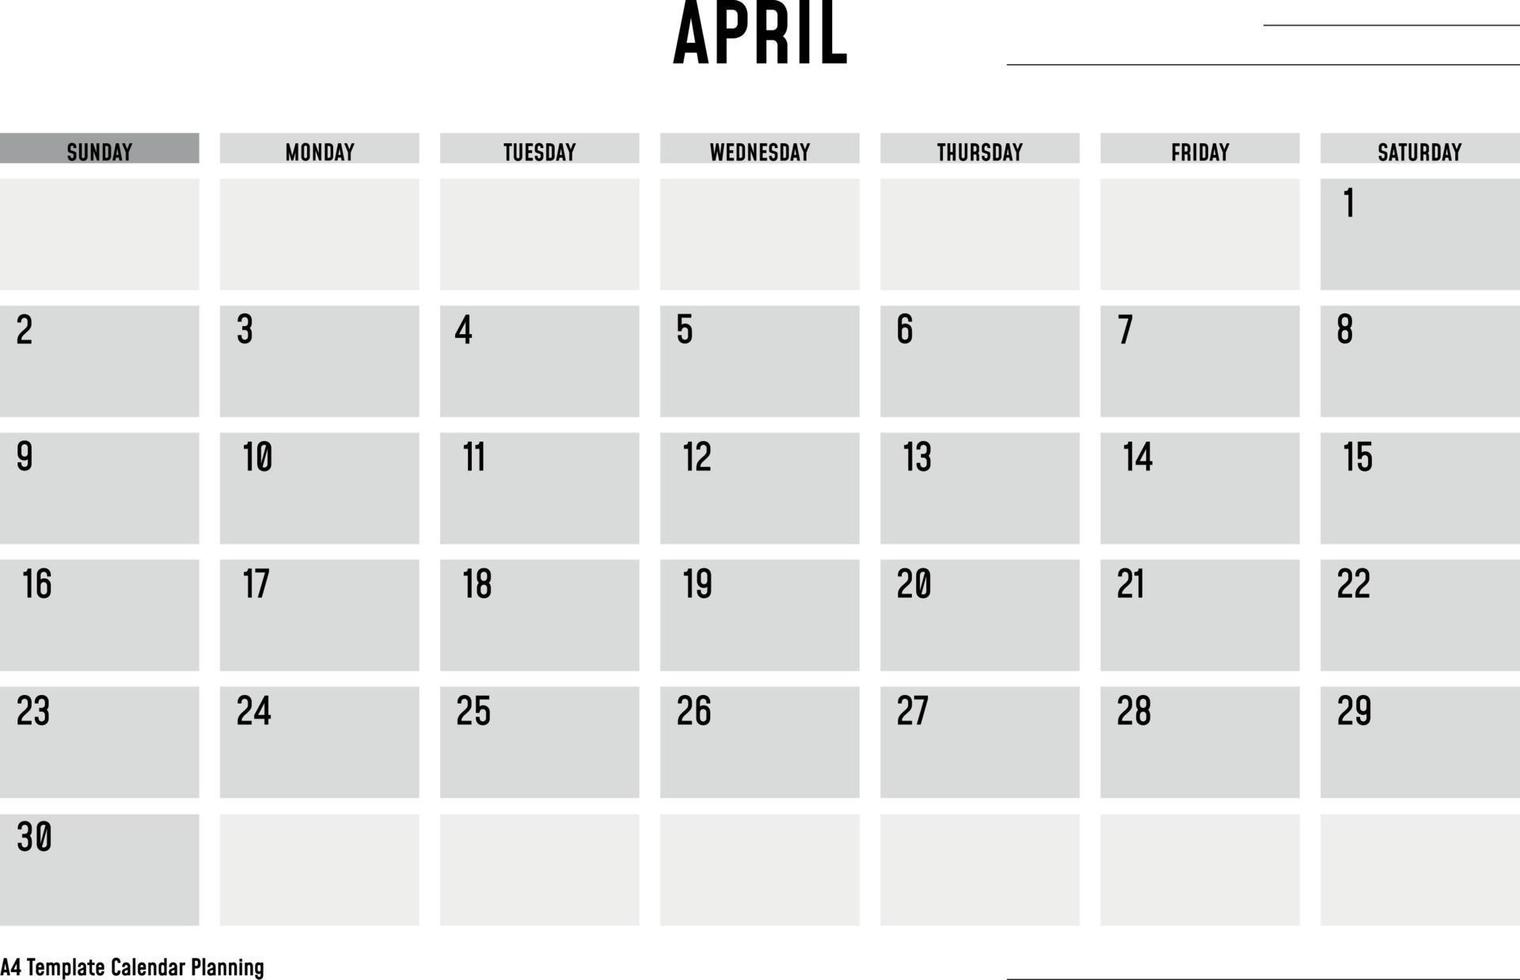 A4 Template Calendar Planning April vector